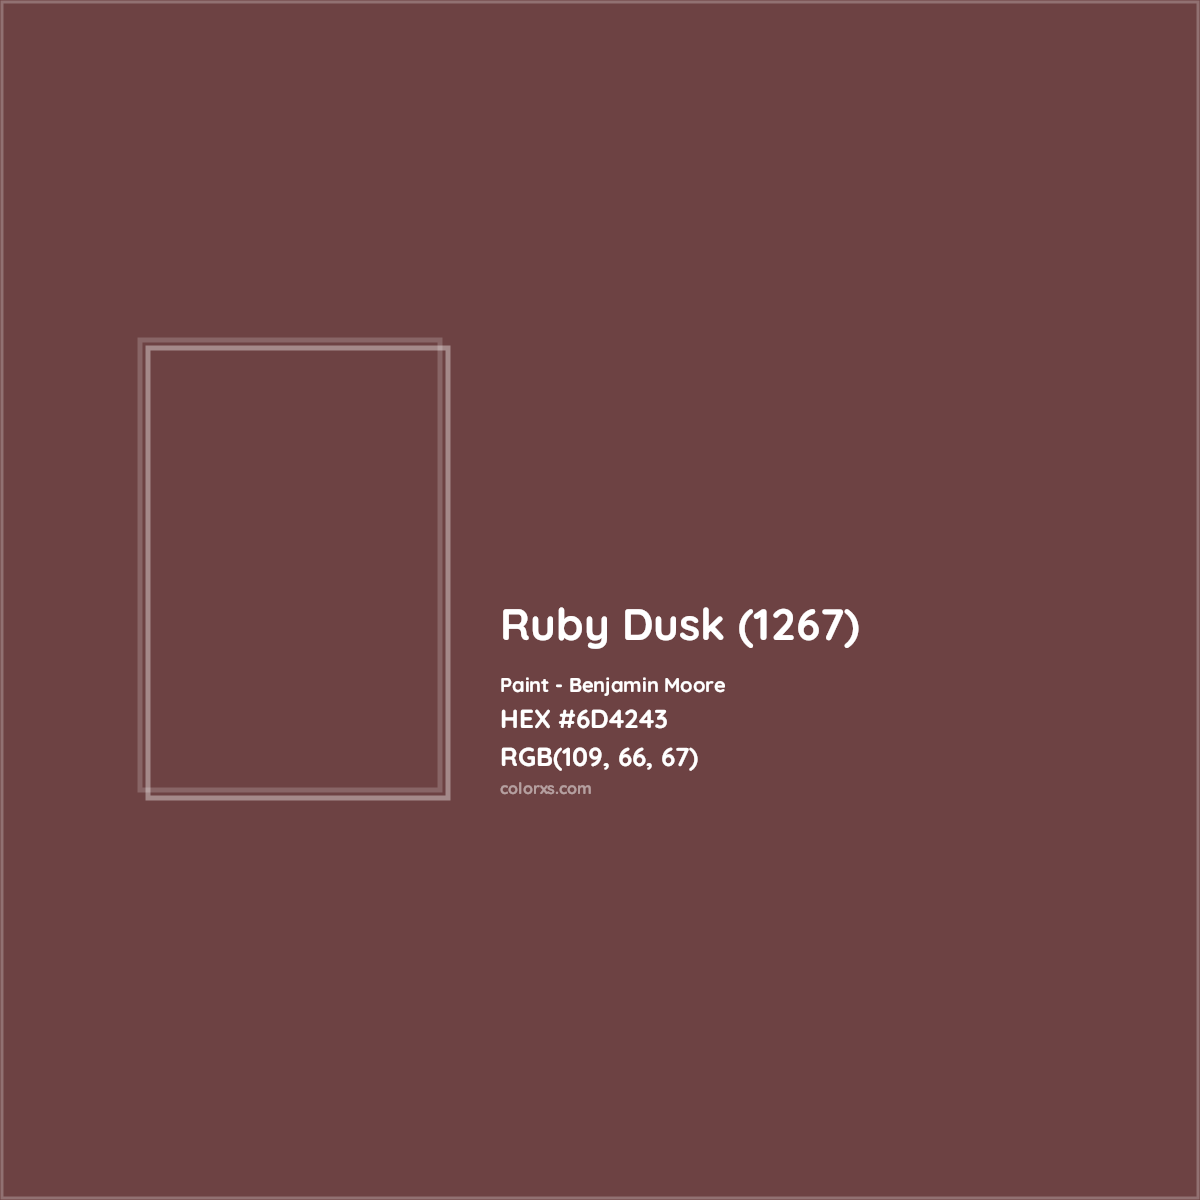 HEX #6D4243 Ruby Dusk (1267) Paint Benjamin Moore - Color Code